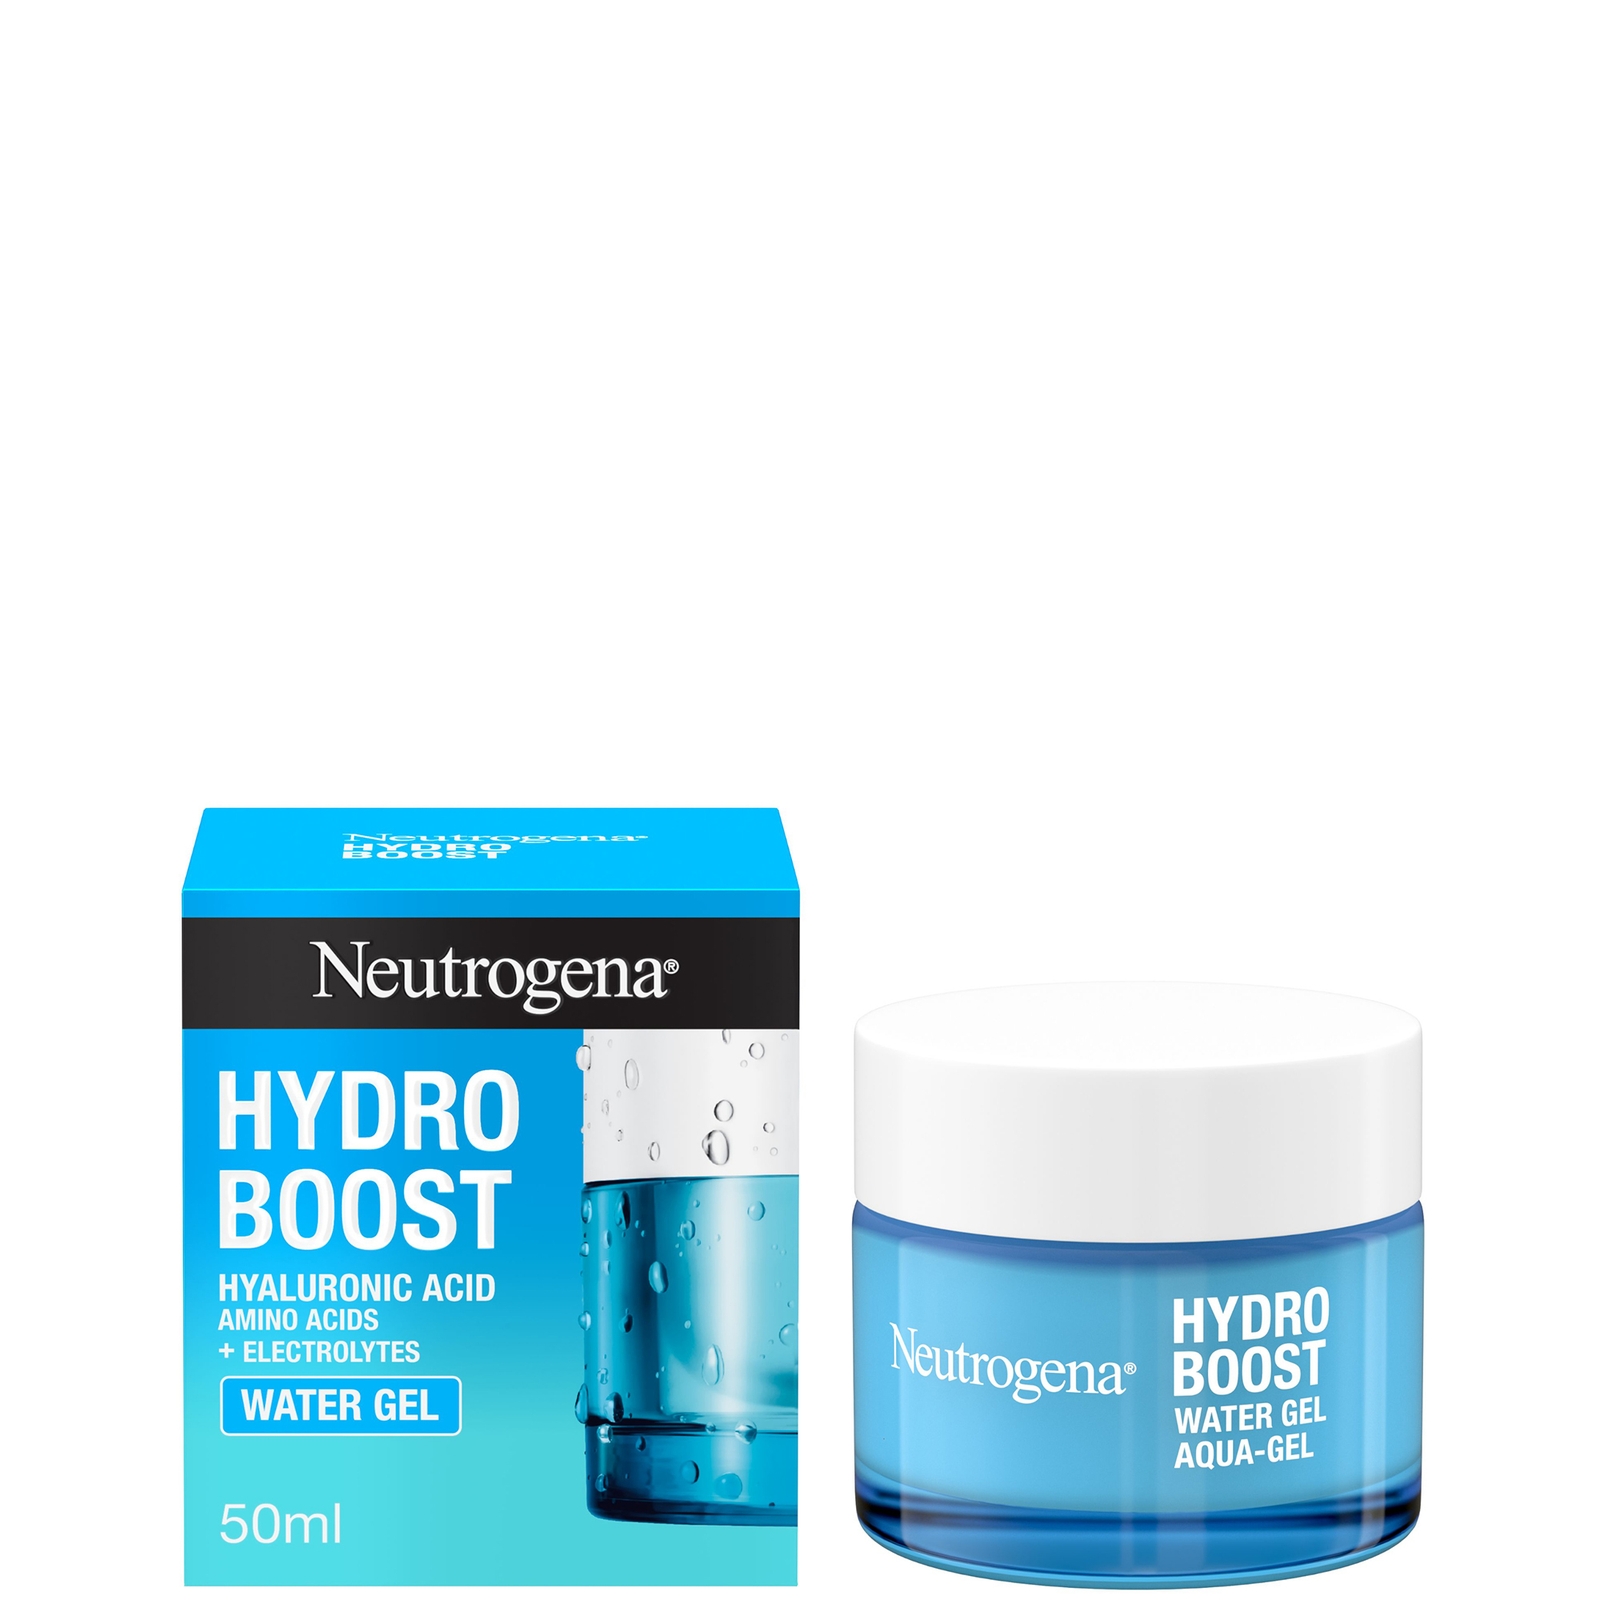 Photos - Cream / Lotion Neutrogena Hydro Boost Water Gel Moisturiser with Hyaluronic Acid 50ml 149 